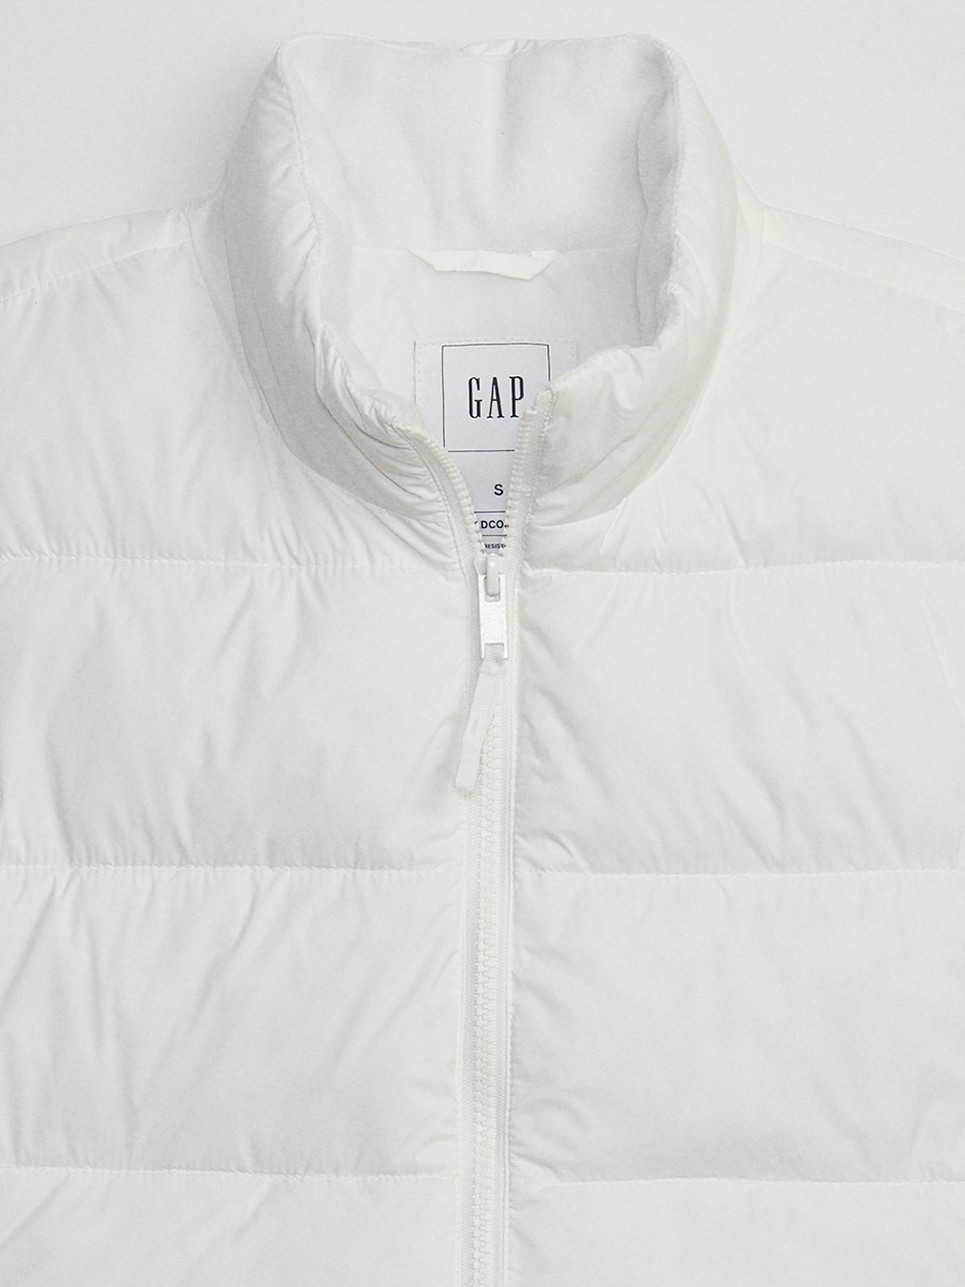 Gap Factory Boys' Coldcontrol Puffer Vest